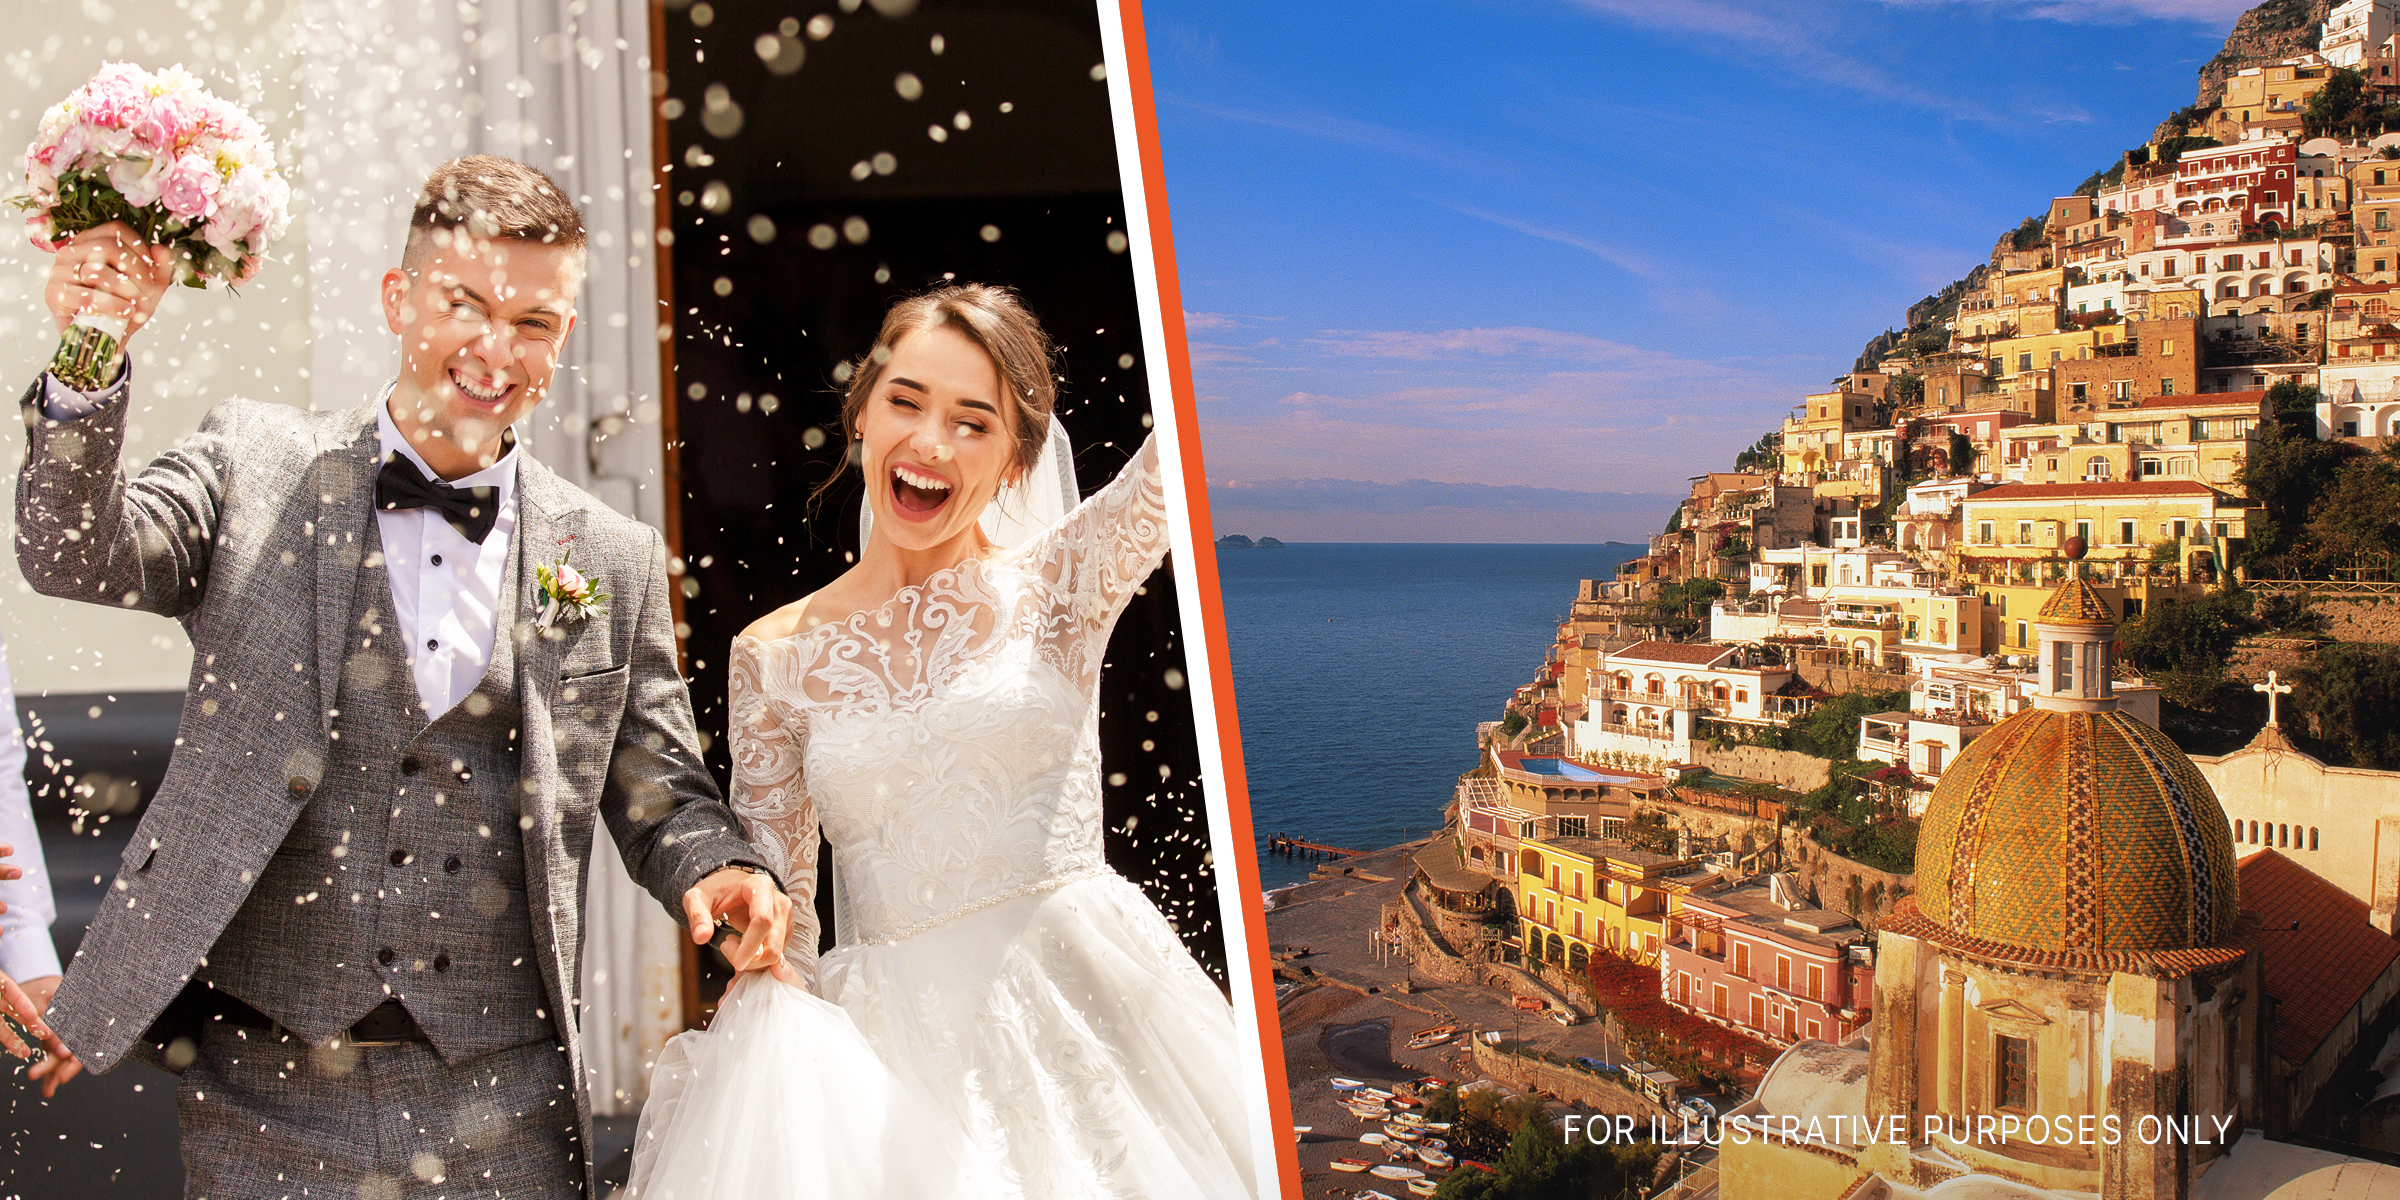 A newlywed couple | Amalfi Coast, Italy | Source: Getty Images